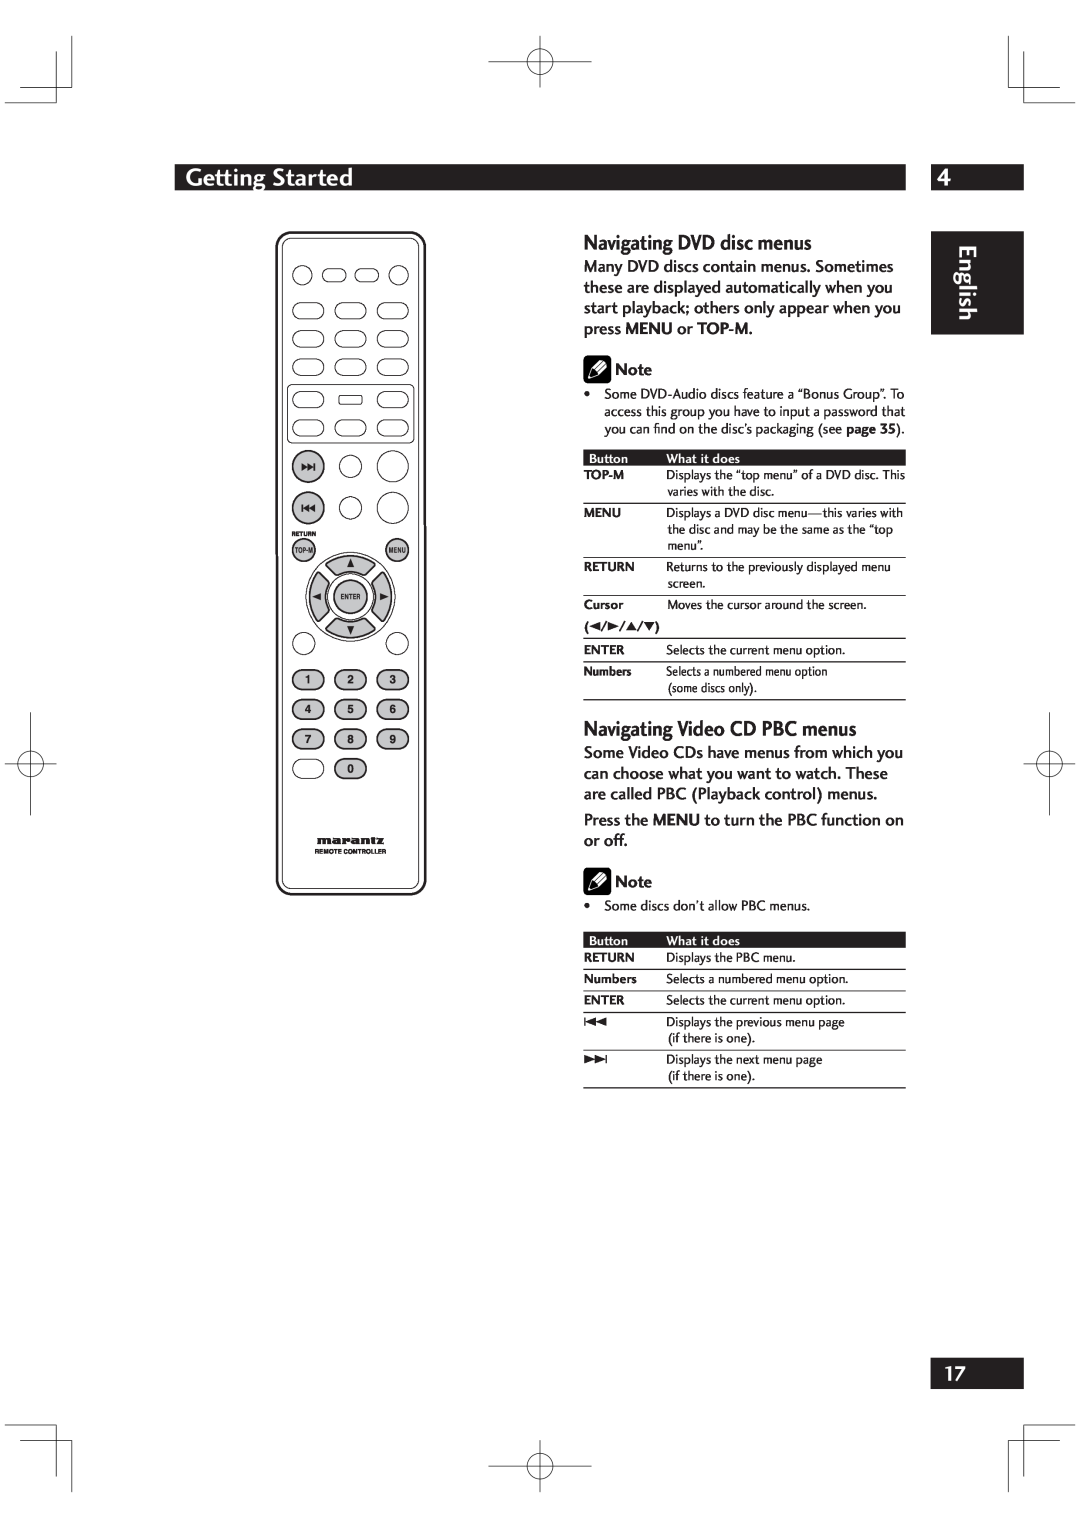 Marantz VC6001 manual Navigating DVD disc menus, Navigating Video CD PBC menus, Getting Started, English 